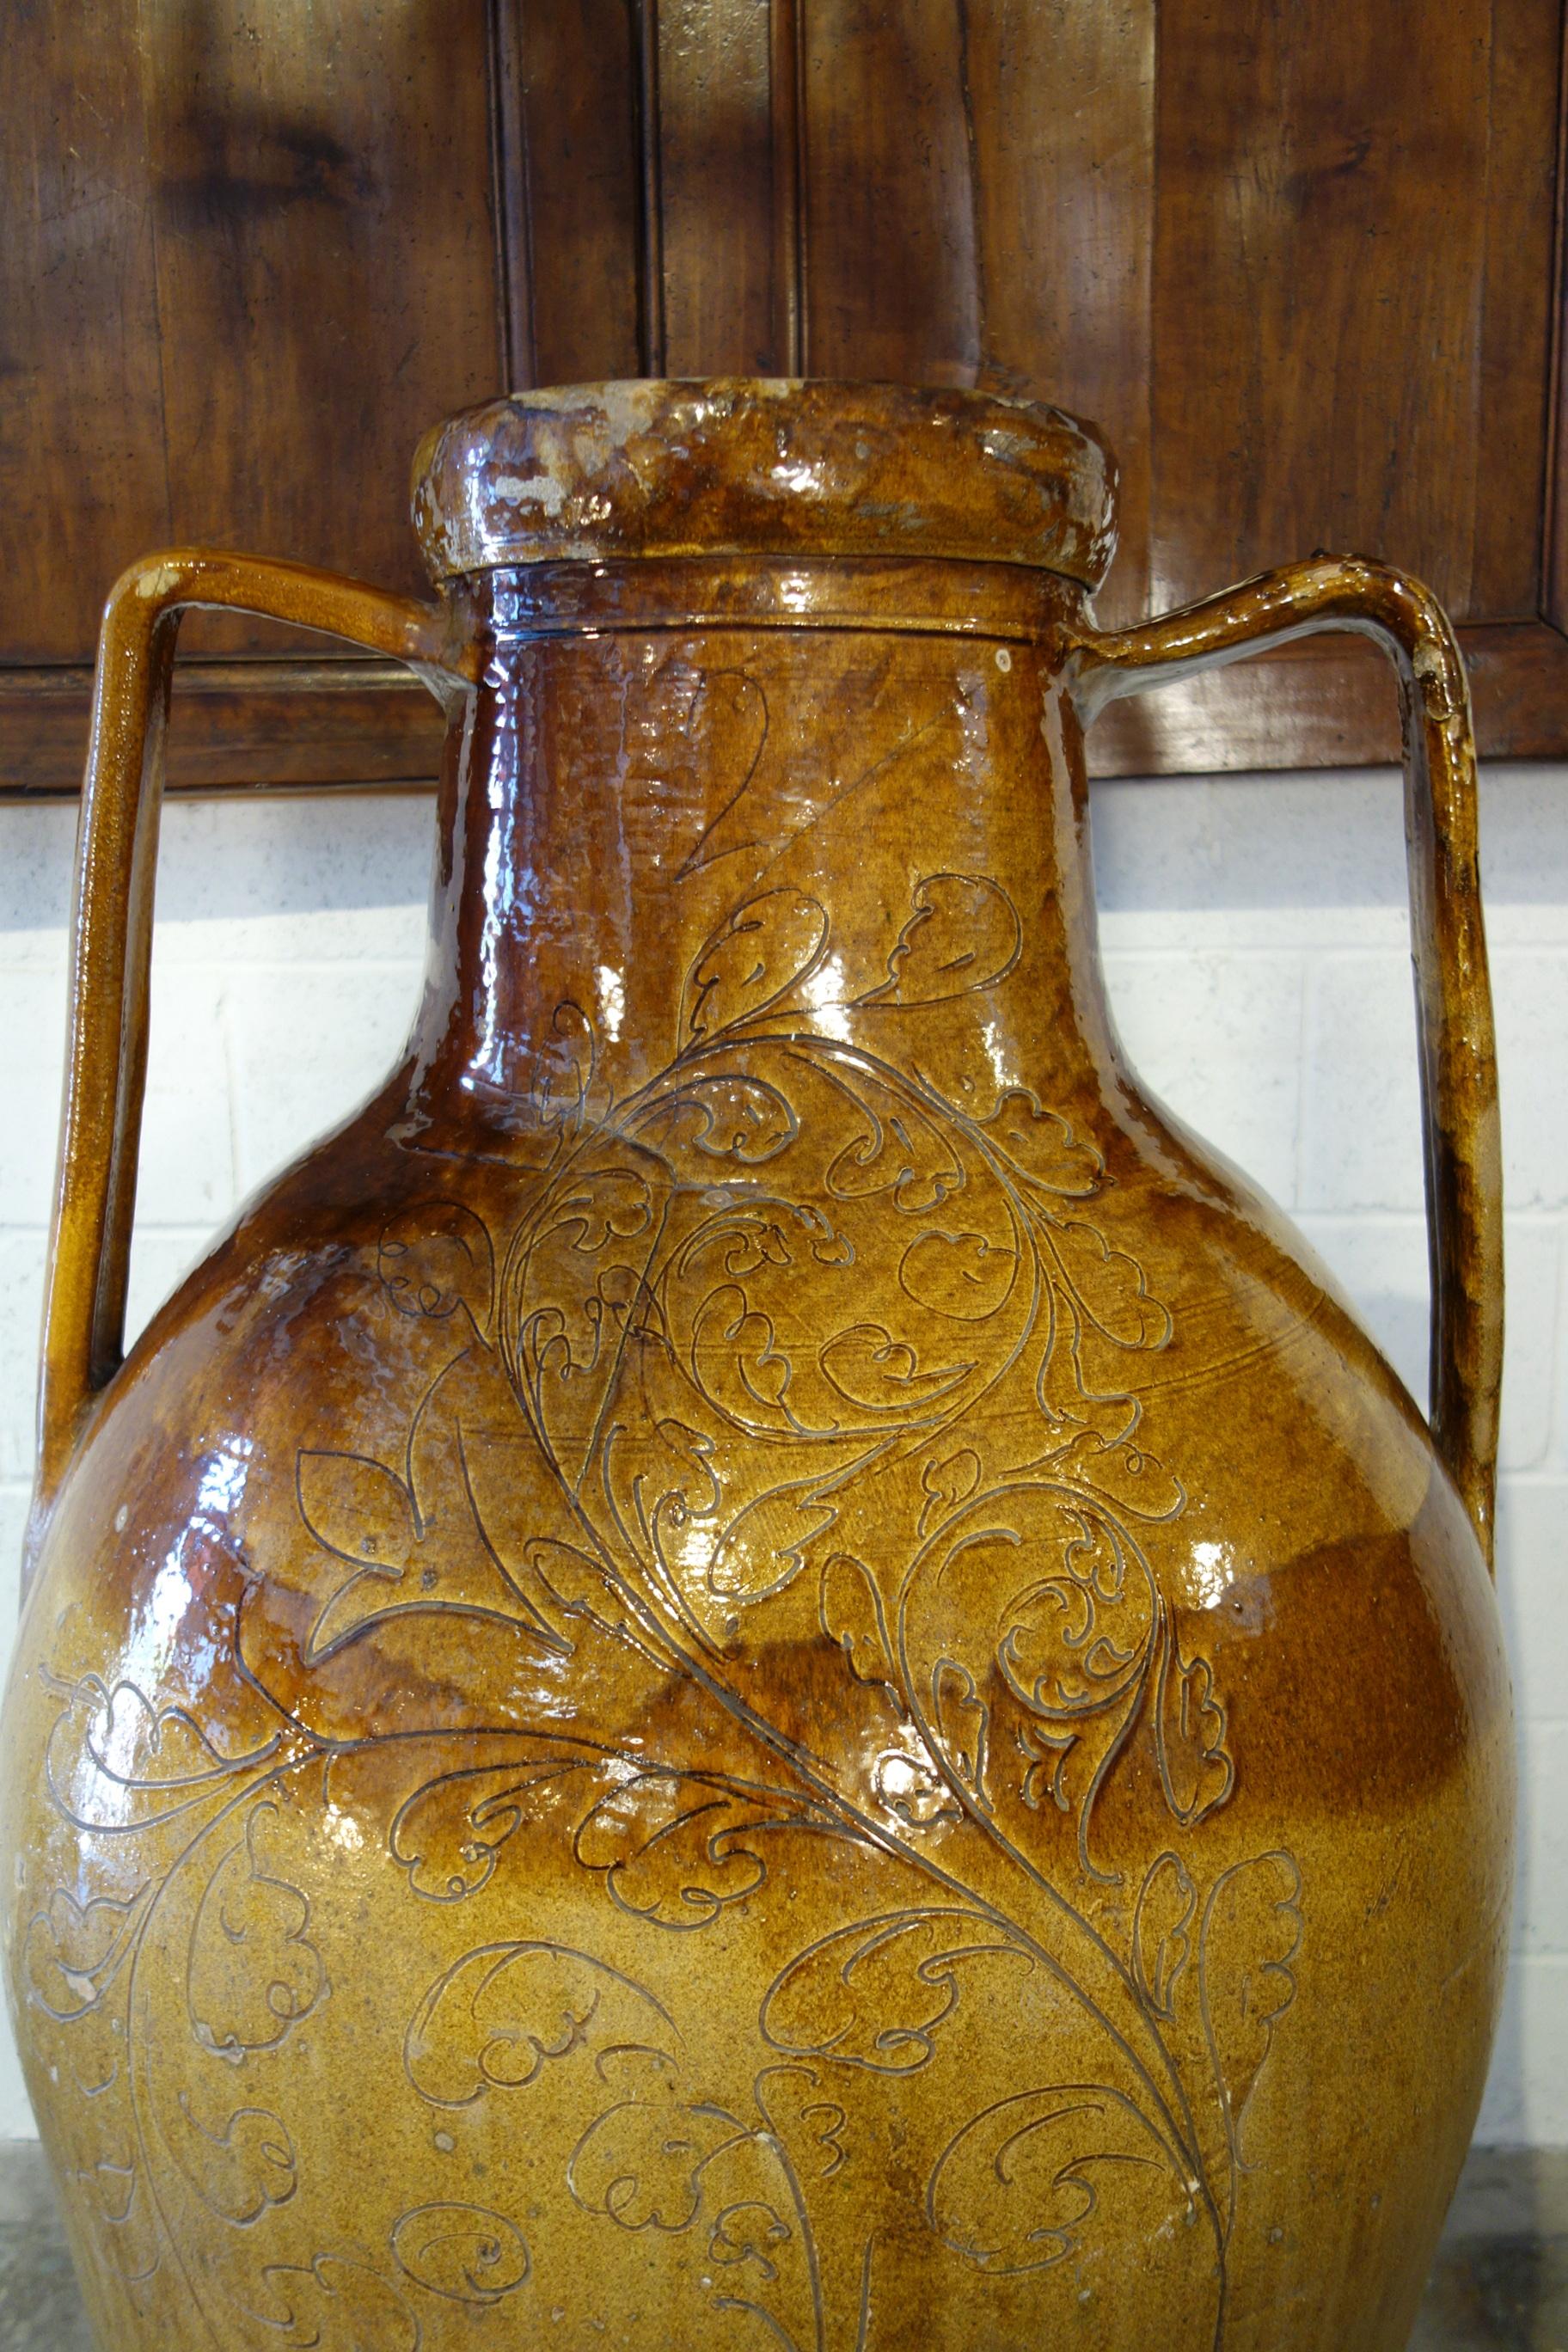 Primitive Antique Italian Orcio Puglia Colossal Jar Ochre and Umber Glaze with Engraving